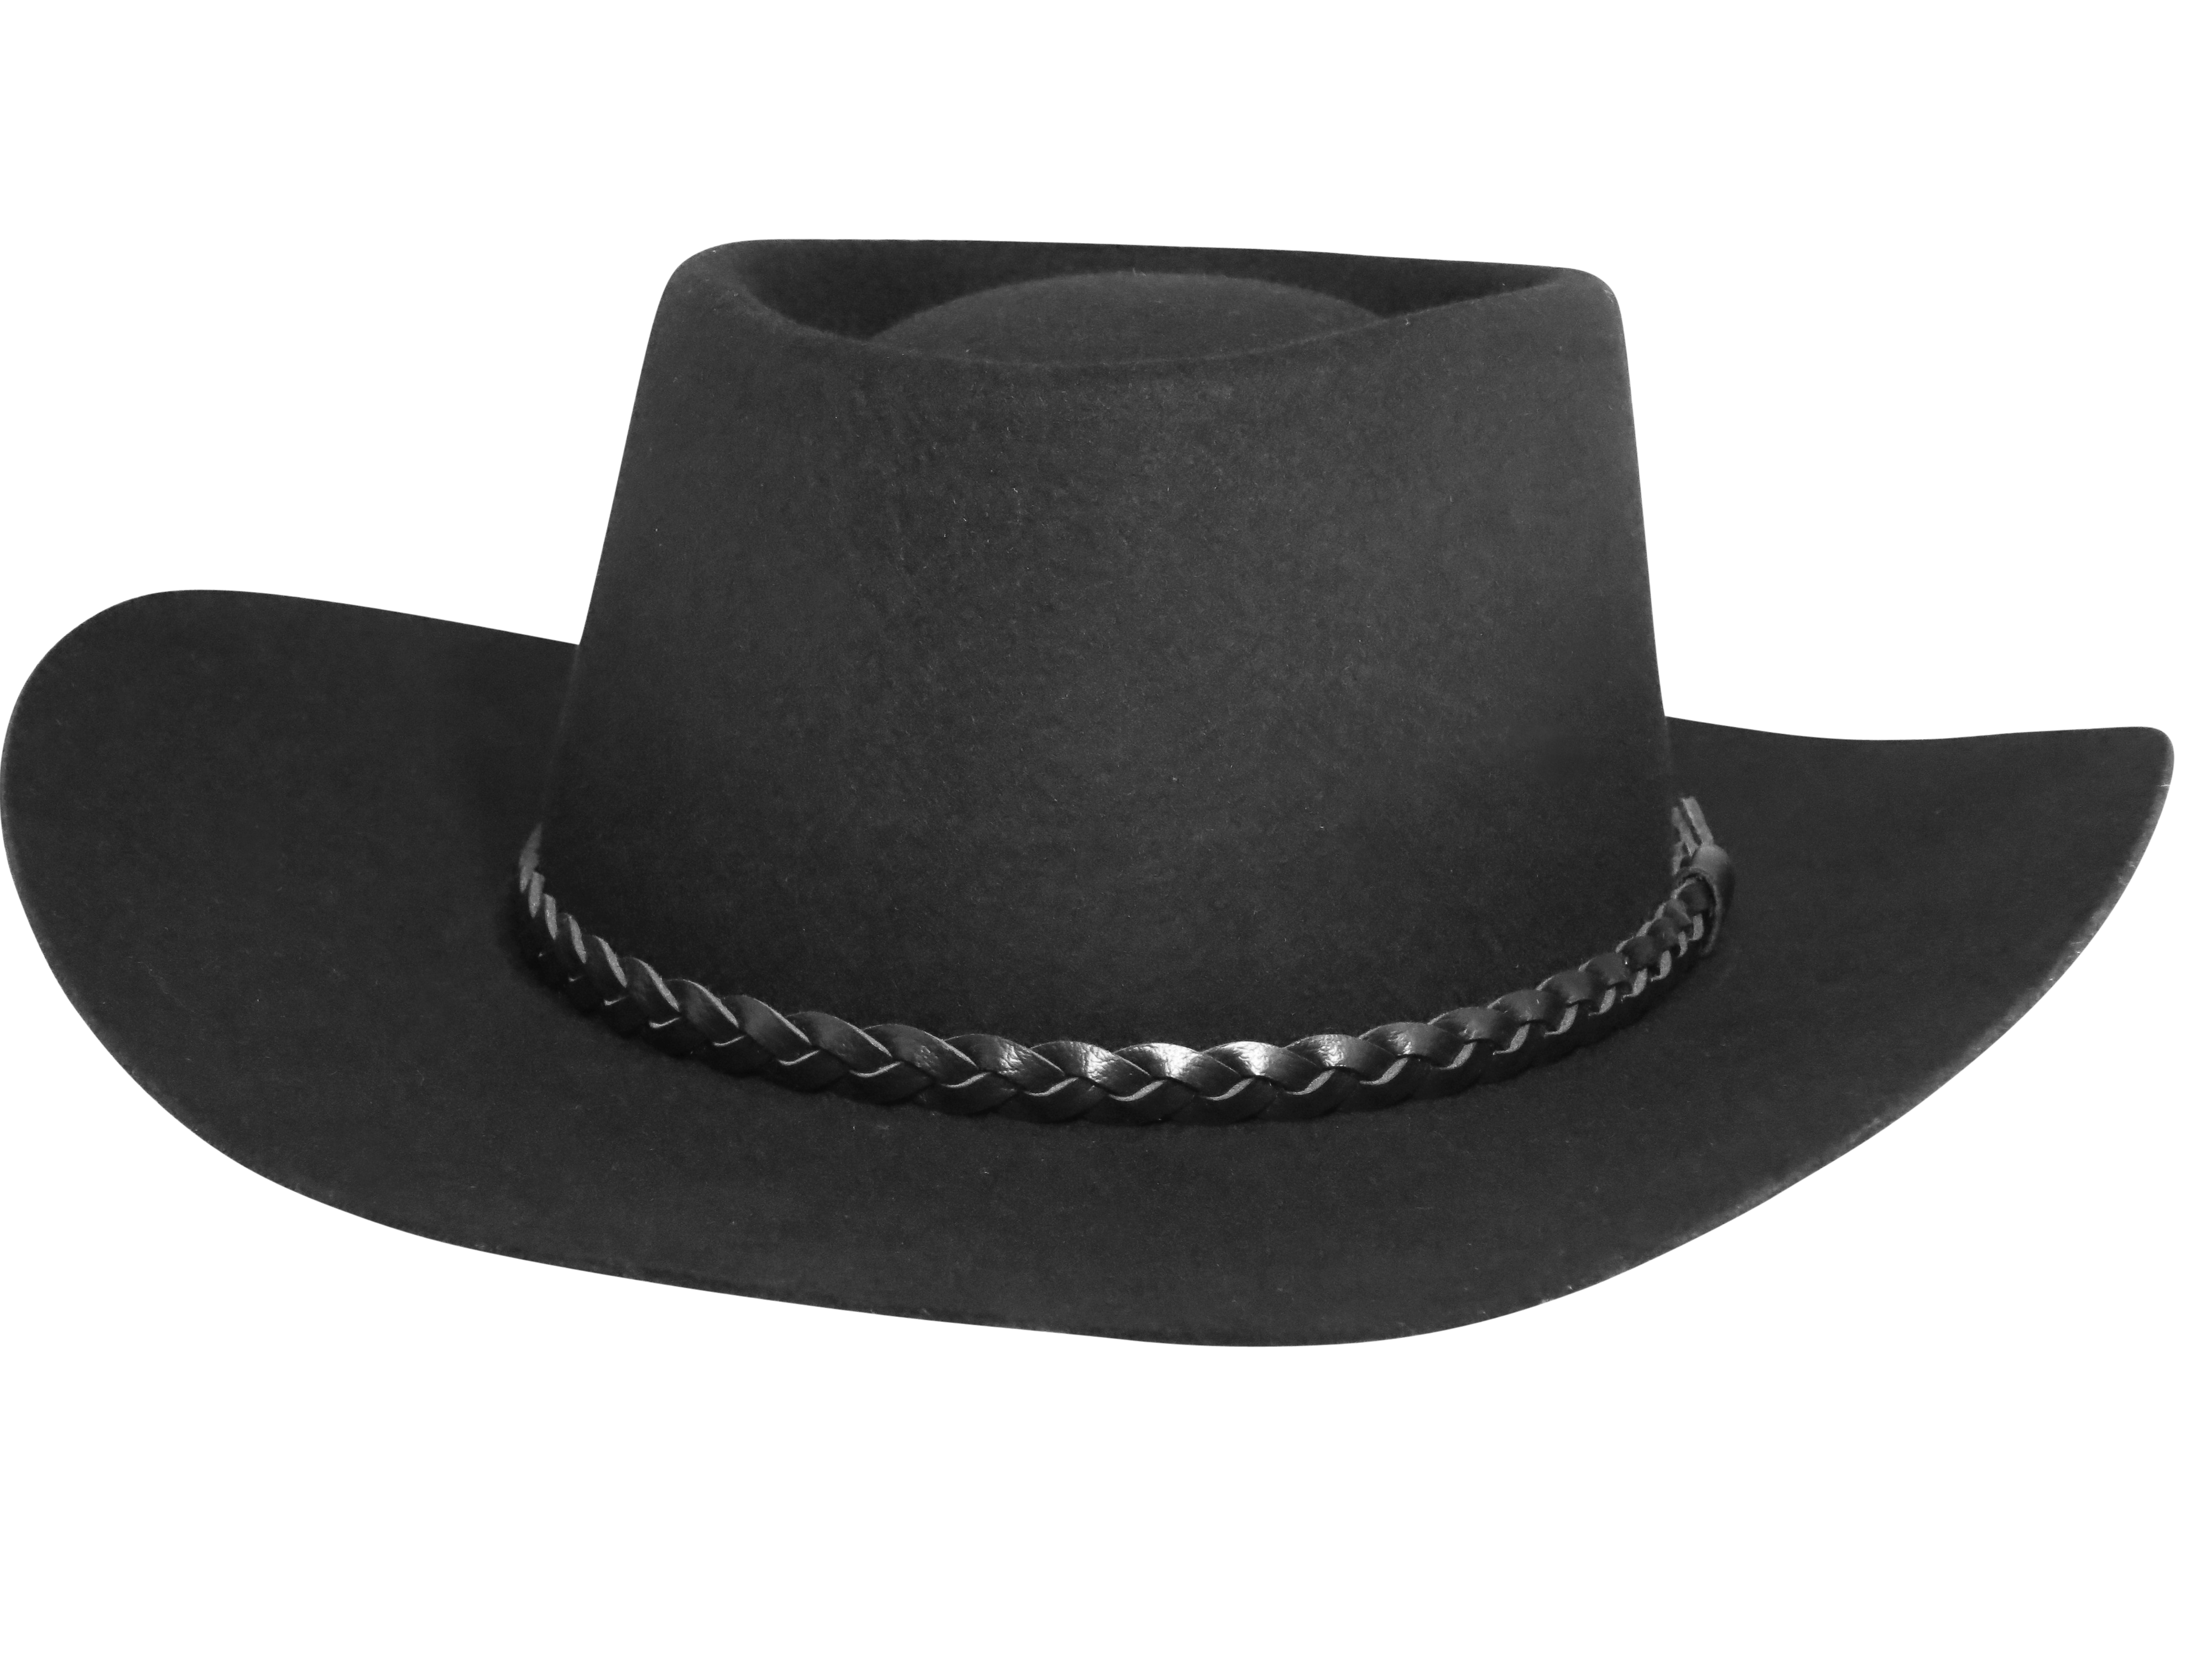 Jackson Michael Hat Black Download Free Image PNG Image